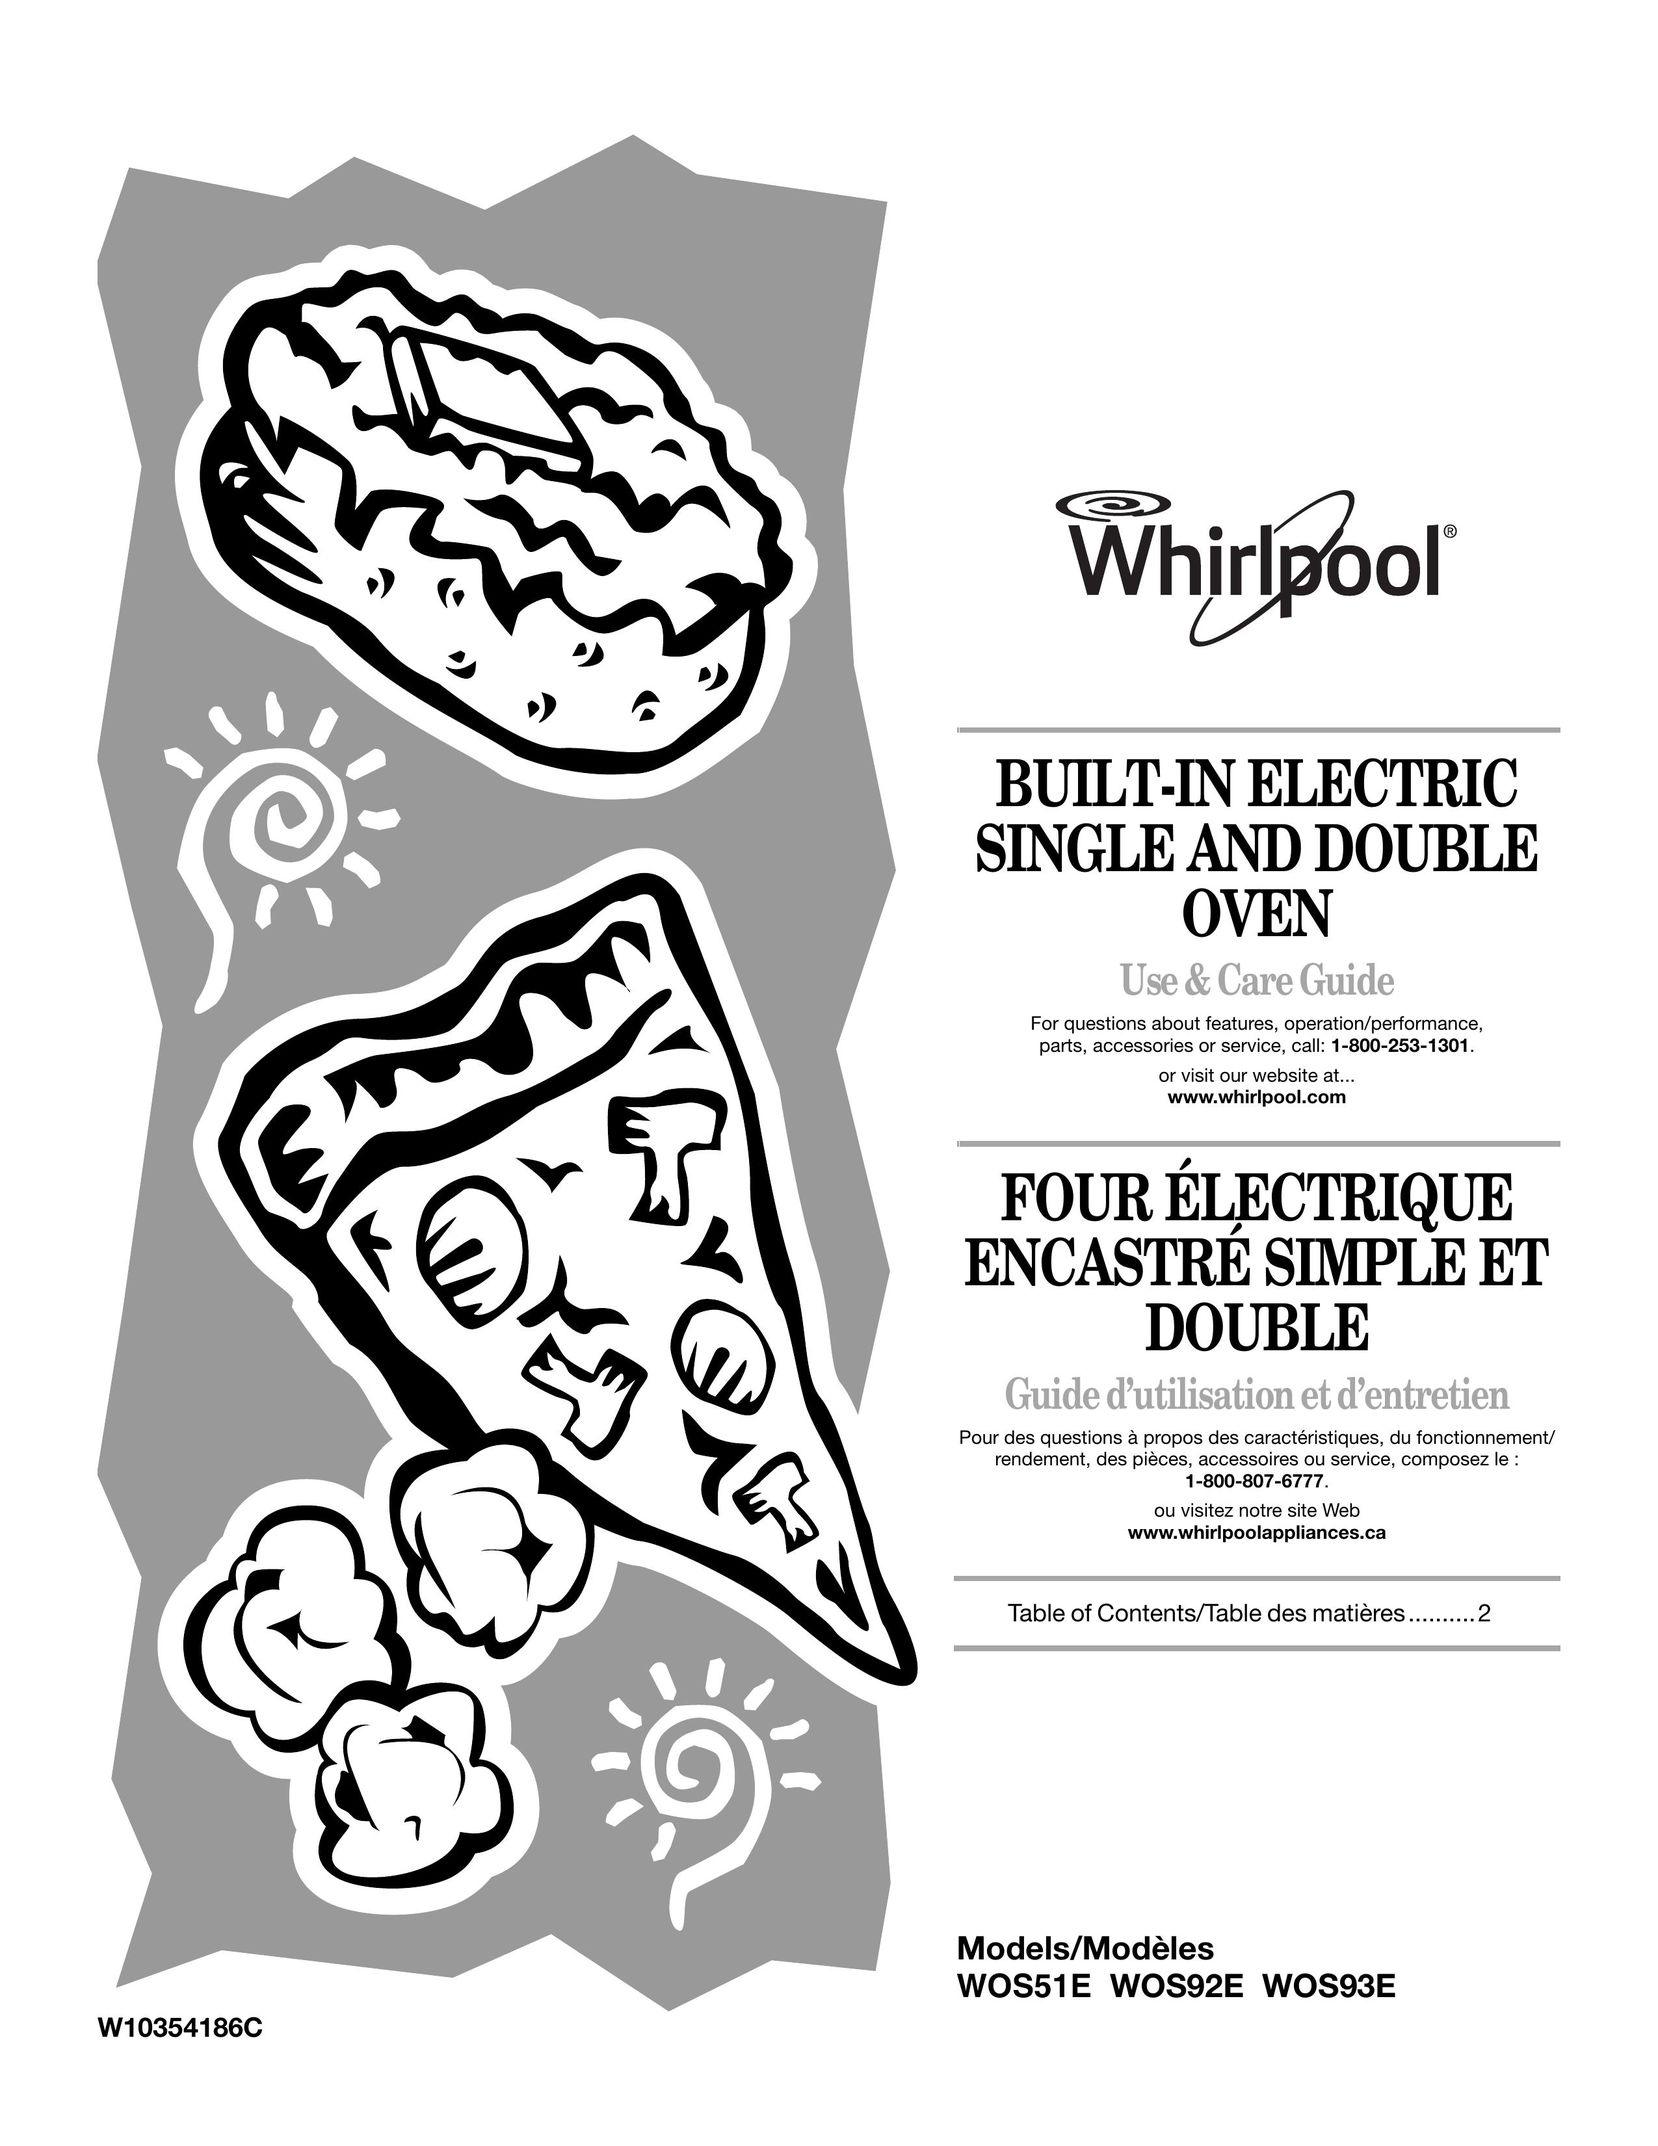 Whirlpool RMC275PVB Double Oven User Manual